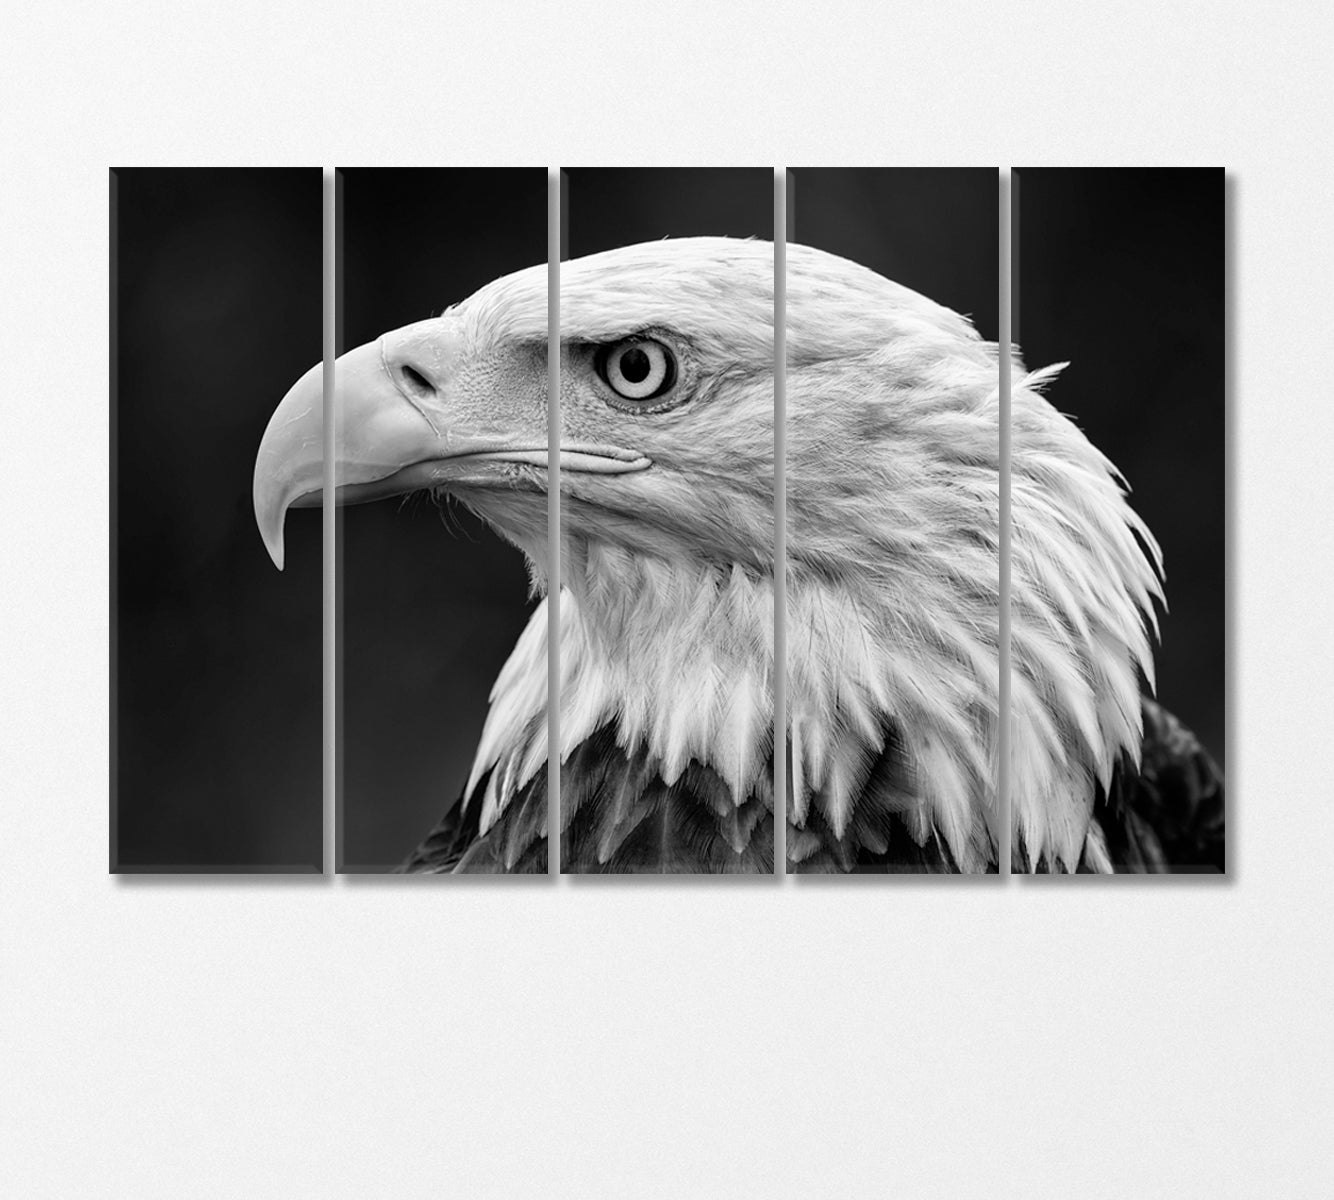 Bald Eagle Portrait in Black and White Canvas Print-Canvas Print-CetArt-5 Panels-36x24 inches-CetArt